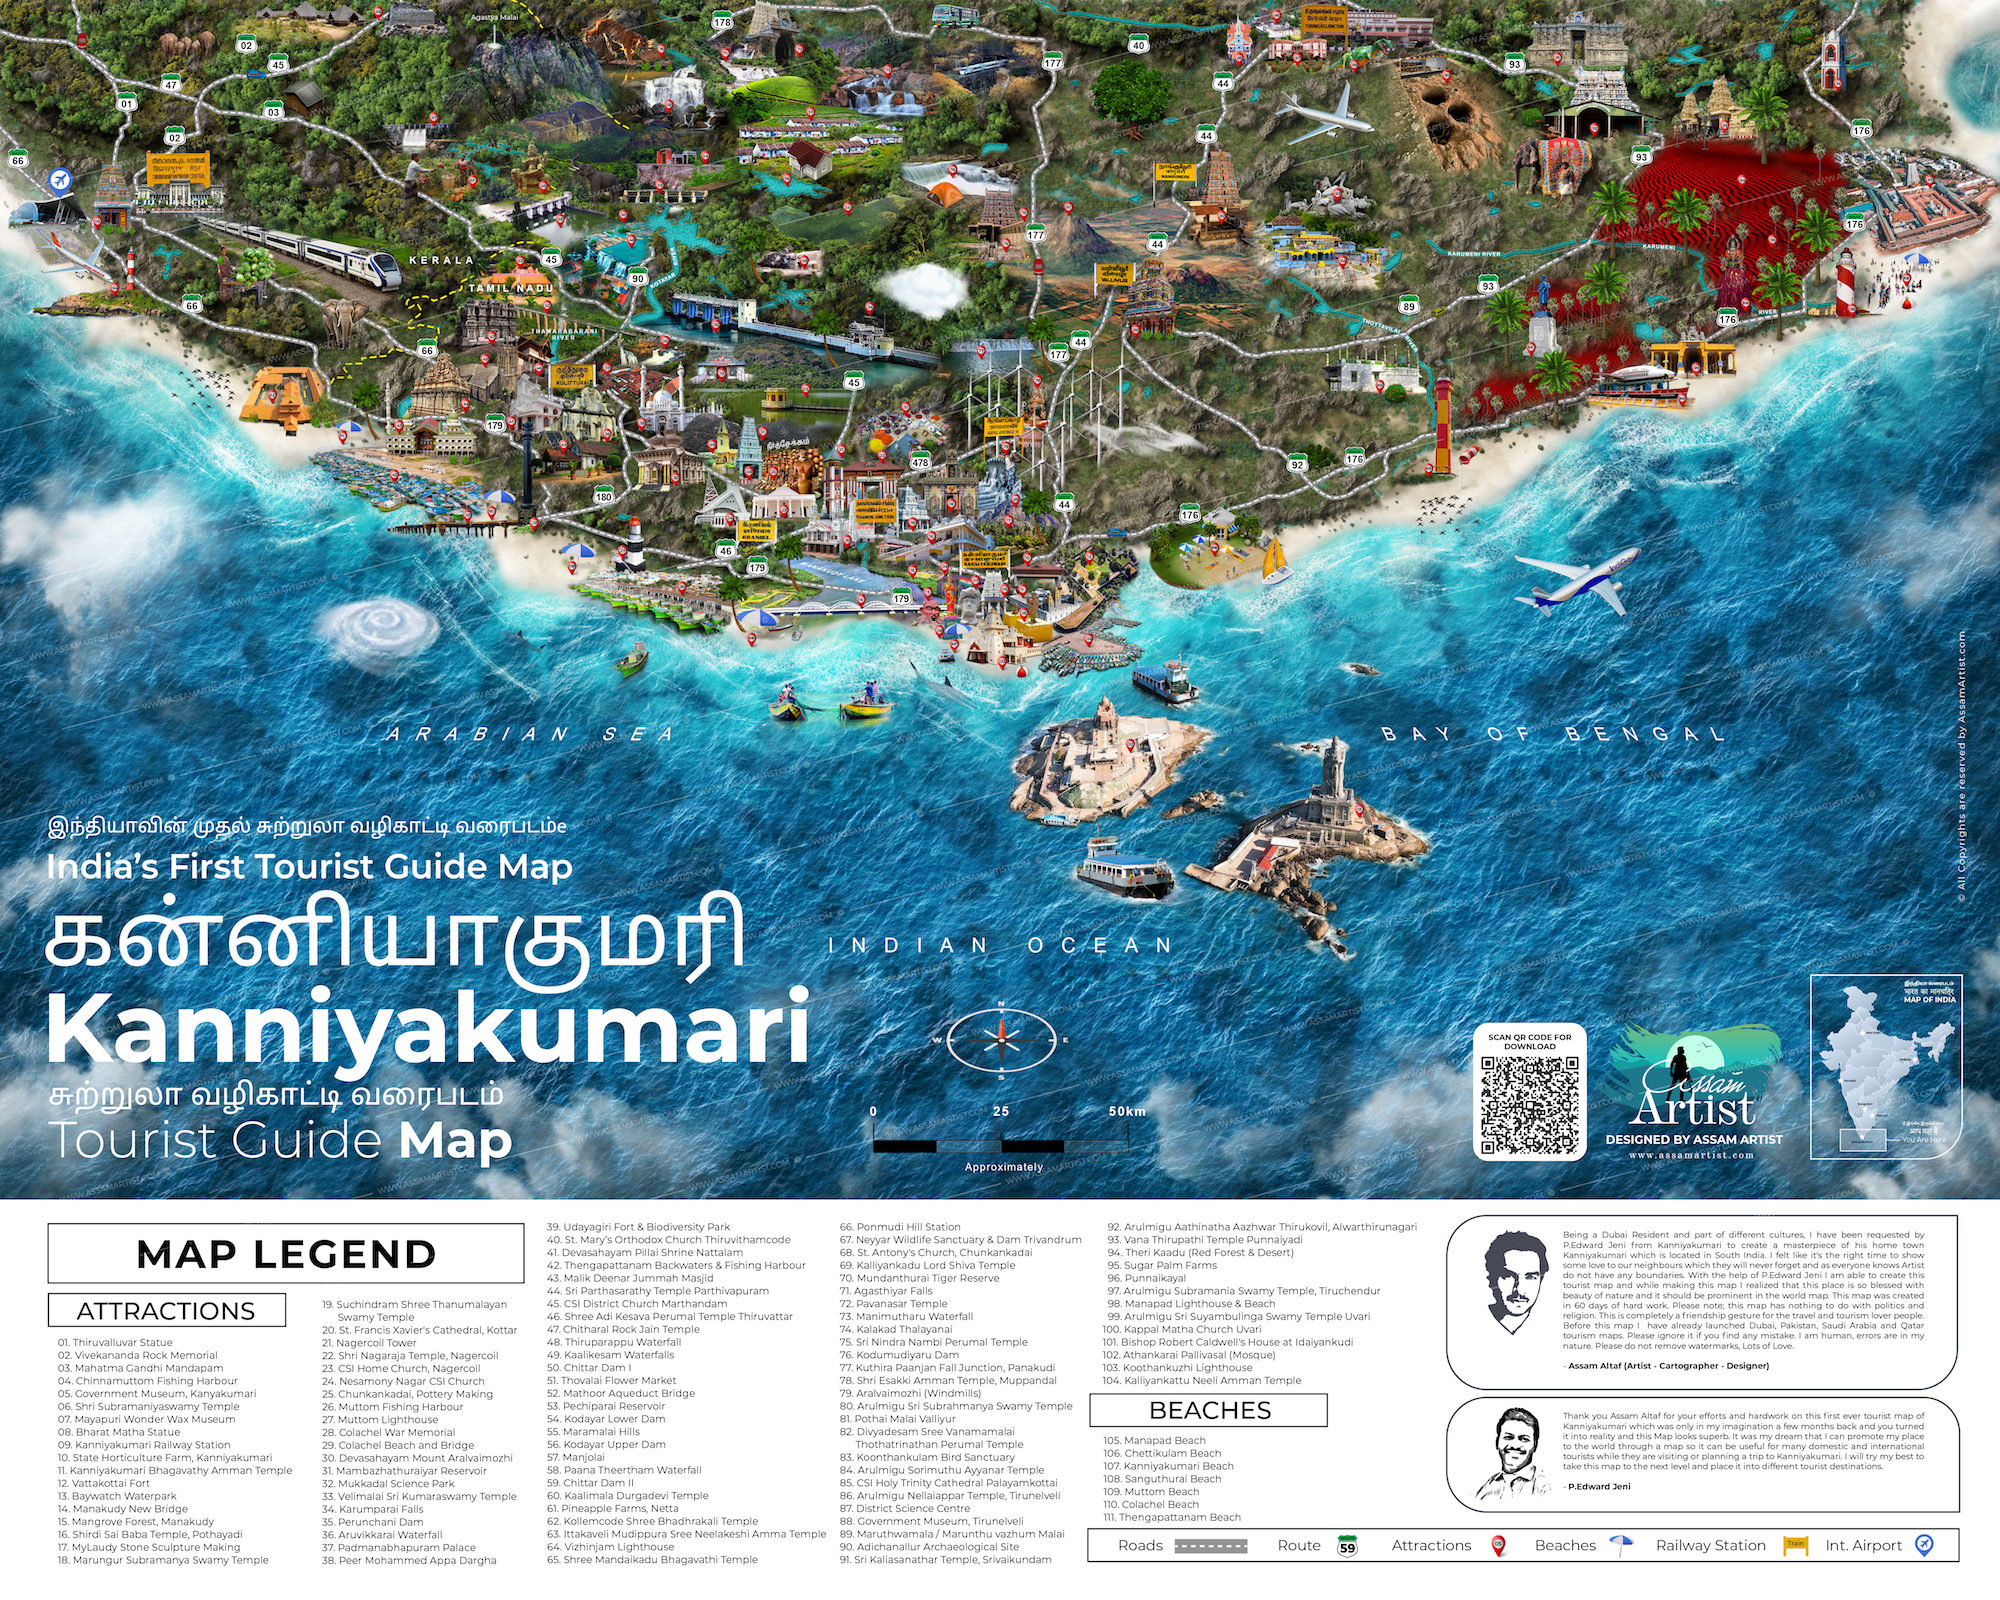 Kanniyakumari tourist guide map